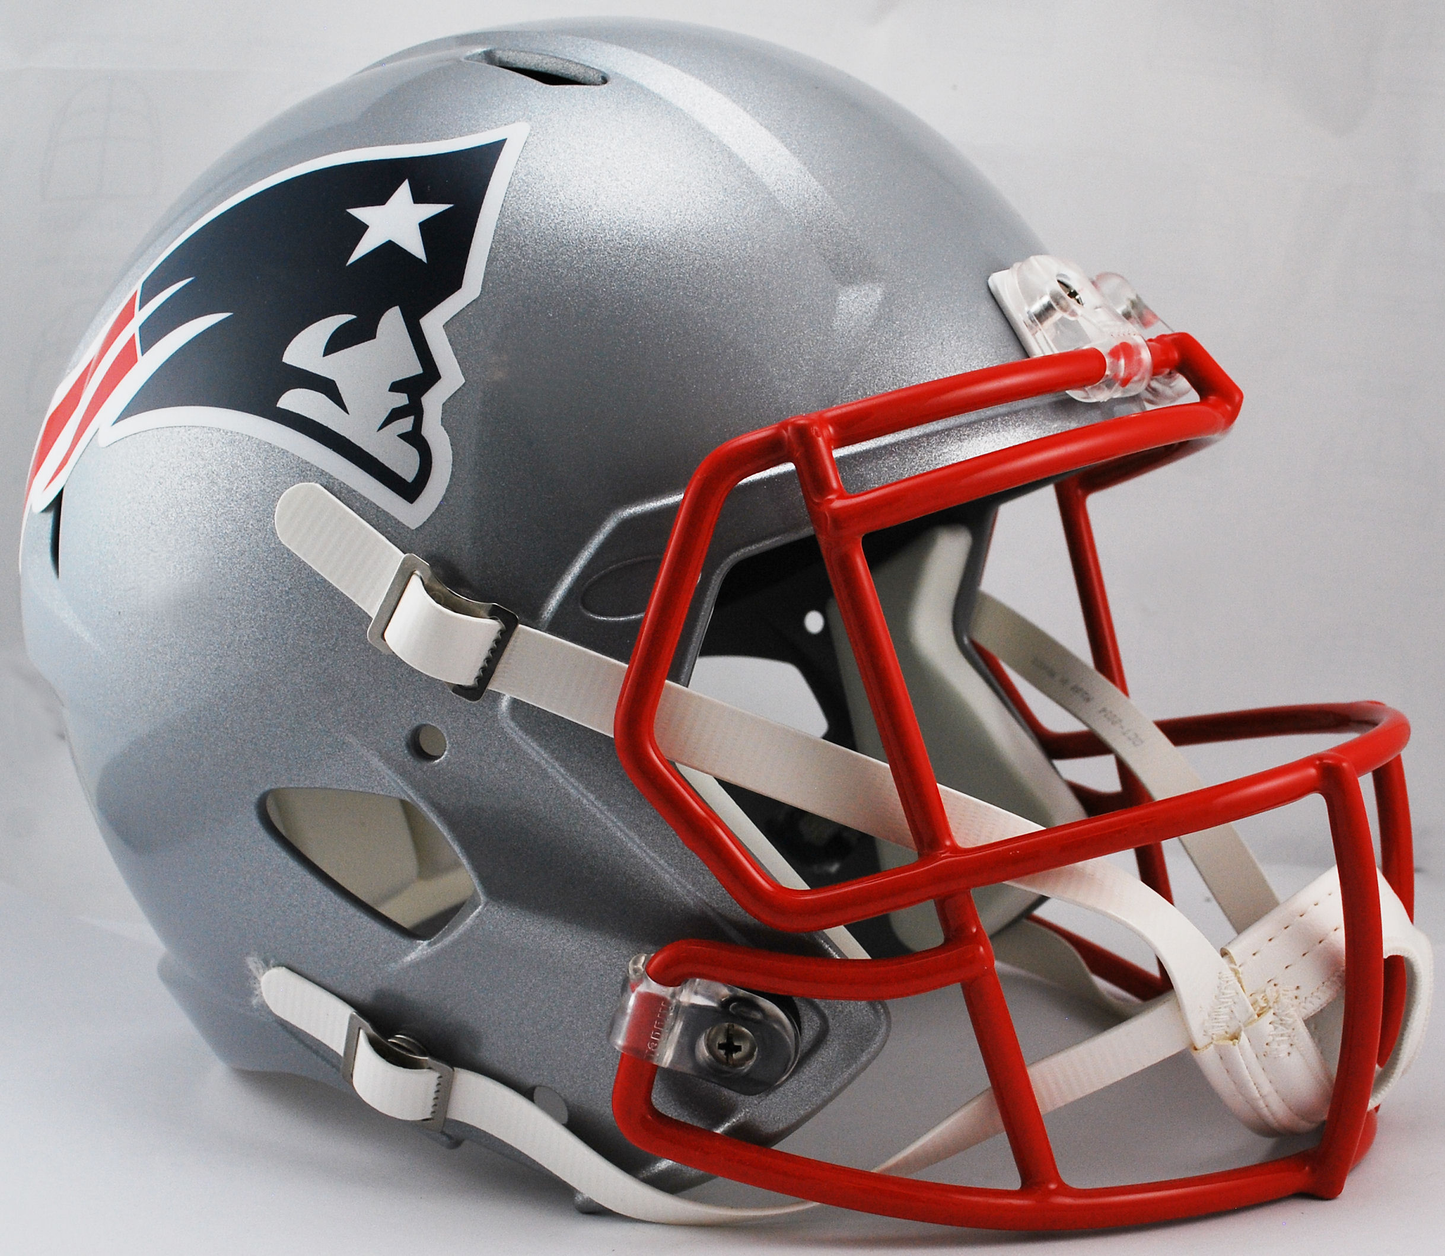 New England Patriots full size replica helmet